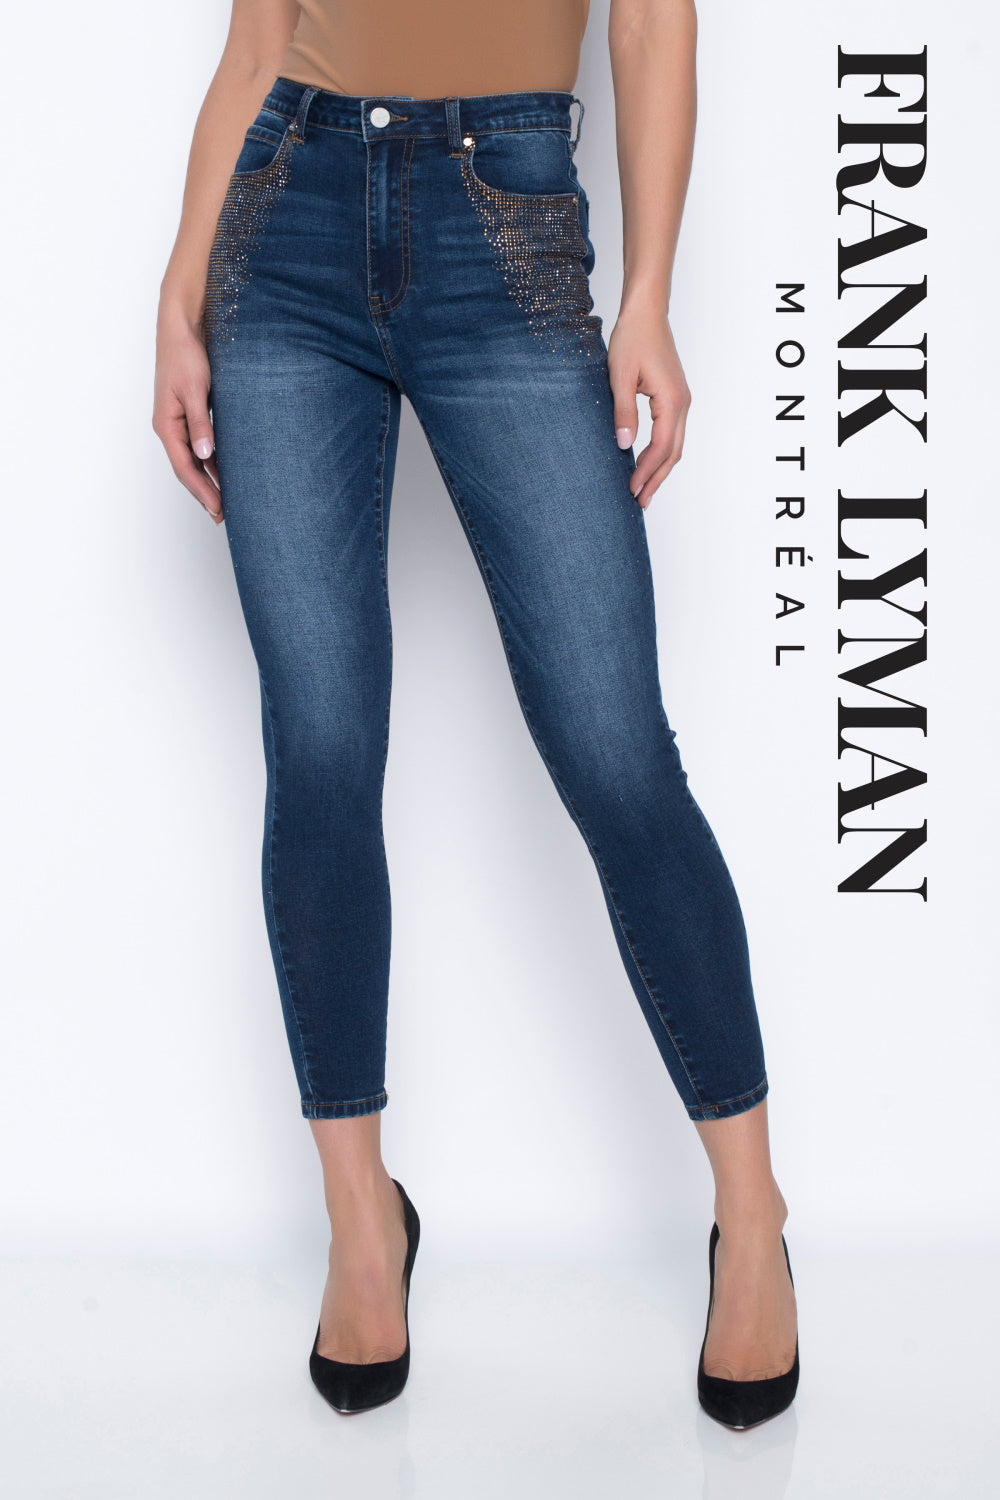 Frank Lyman Sequin Denim Jeans